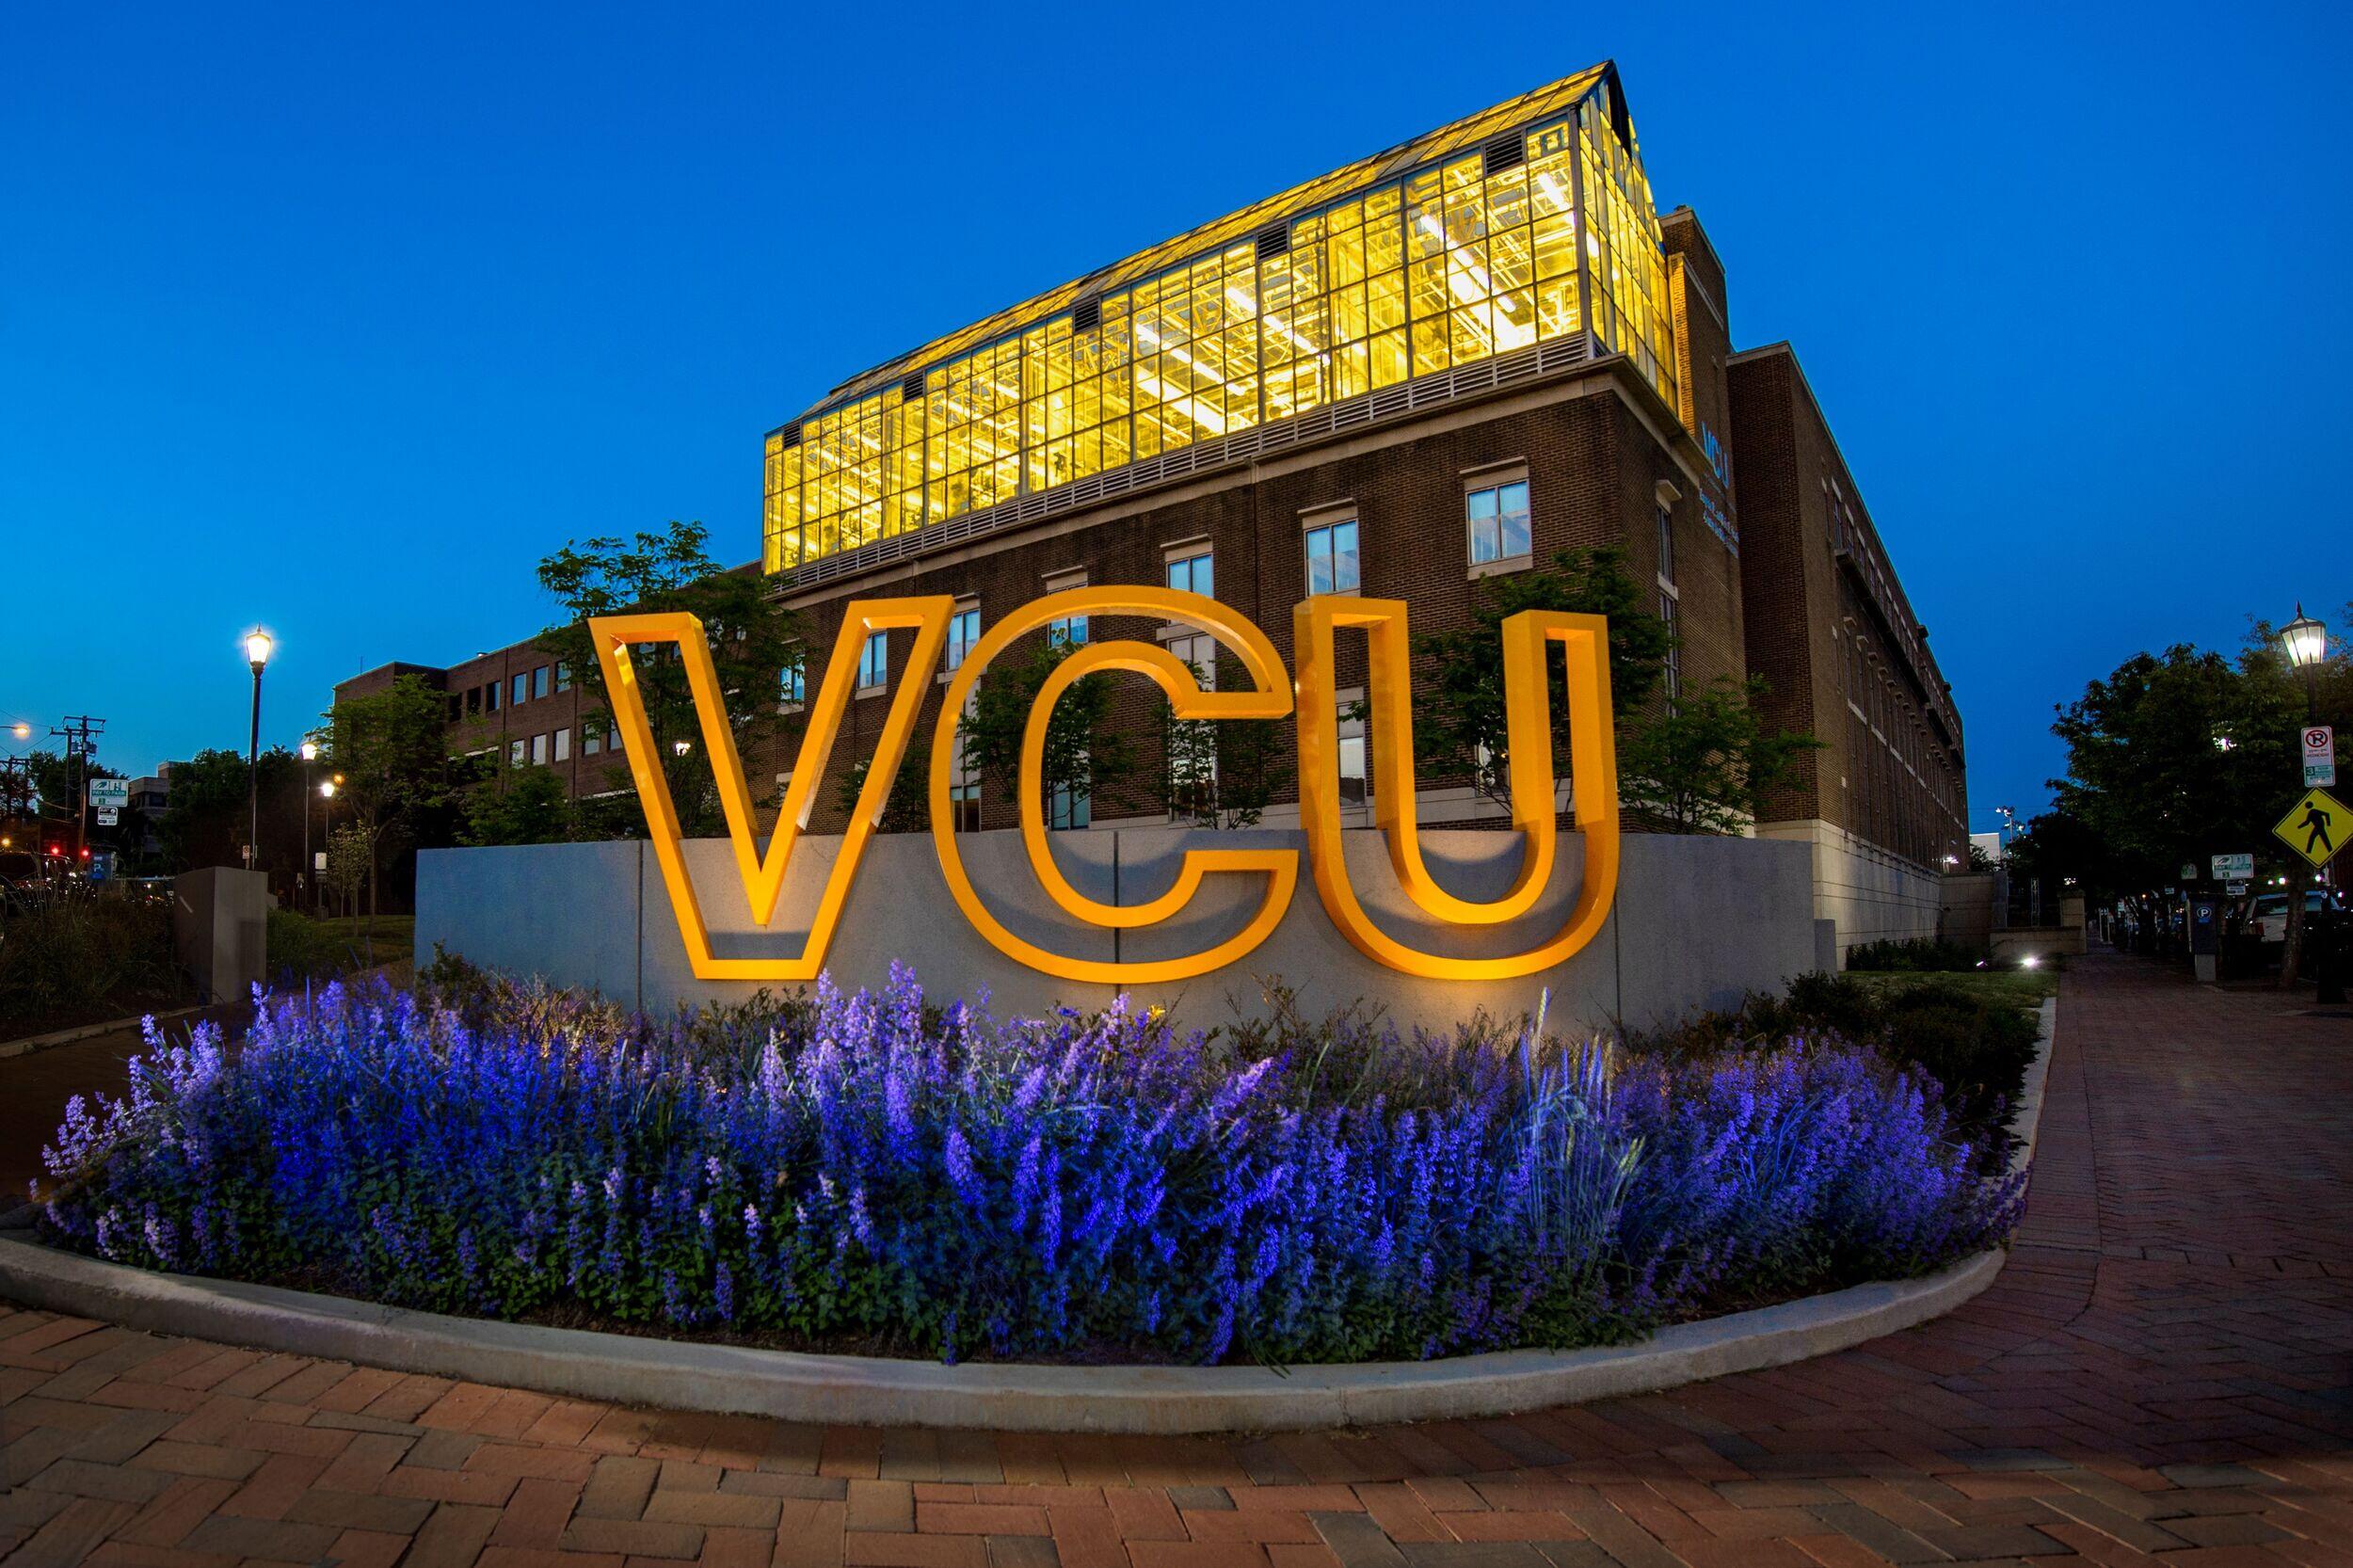 VCU sign lit up at night.